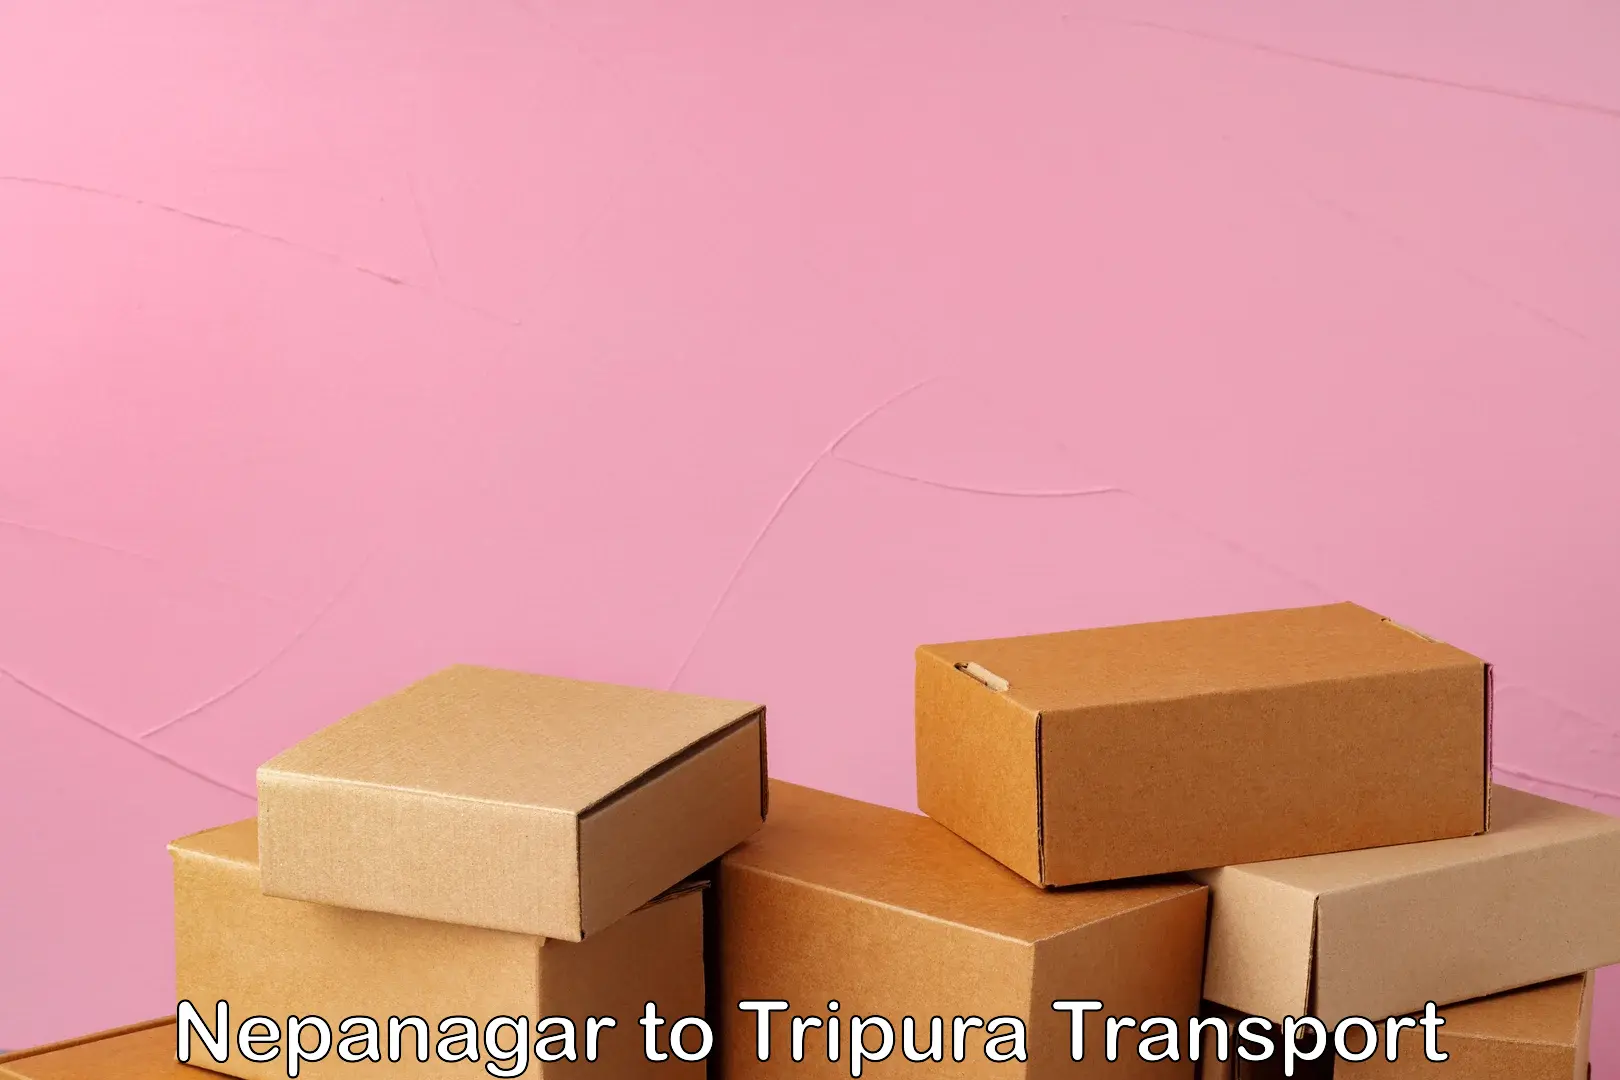 Shipping partner Nepanagar to Udaipur Tripura